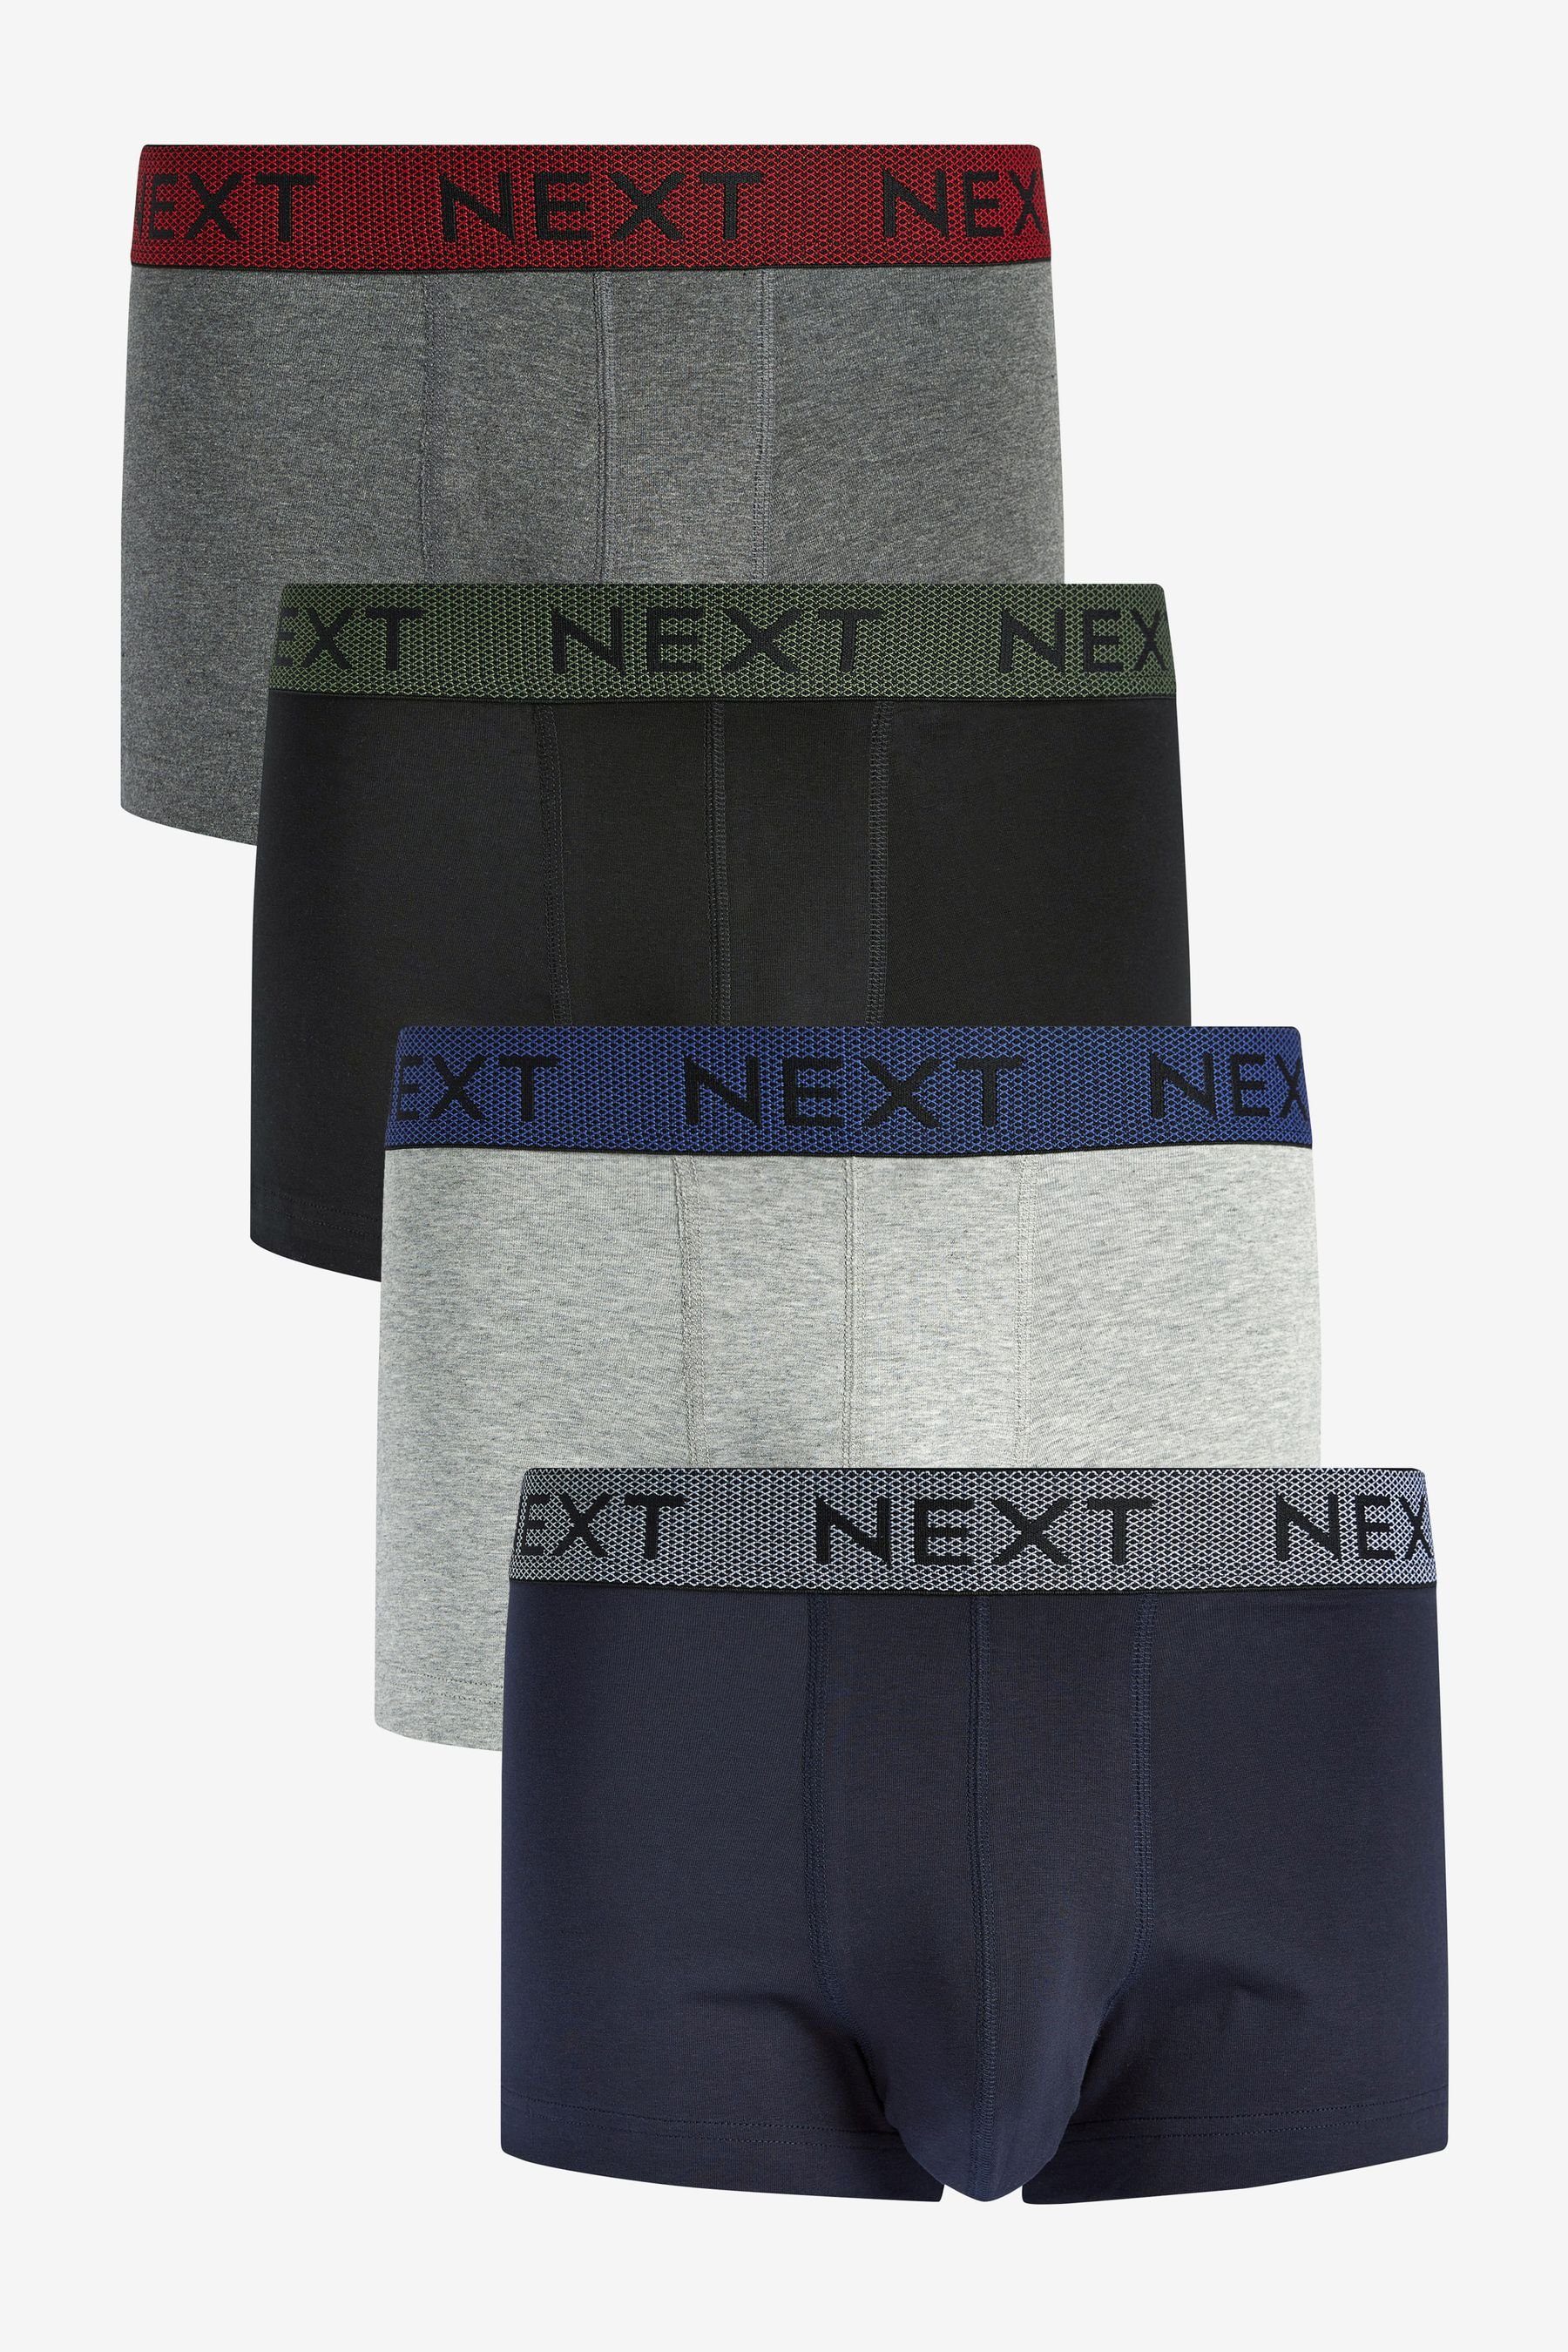 Next Hipster Boxershorts, 4er-Pack (4-St) Grey Blue Textured Waistband